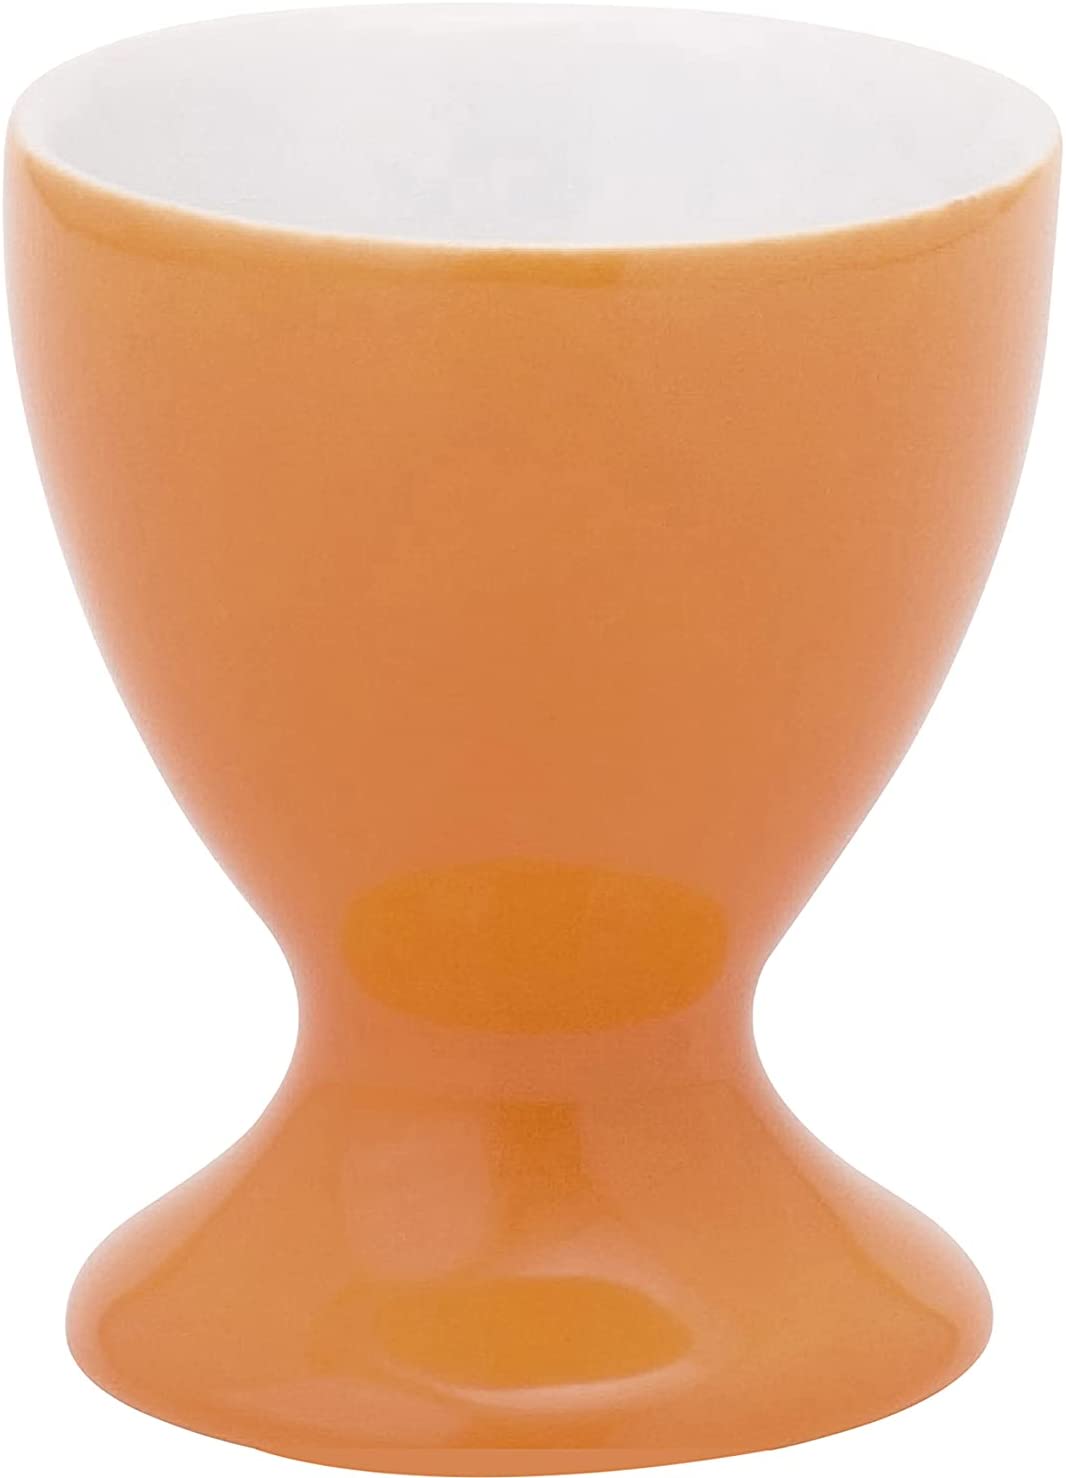 KAHLA Pronto Egg Cup With Base, Orange Color, 1 Piece